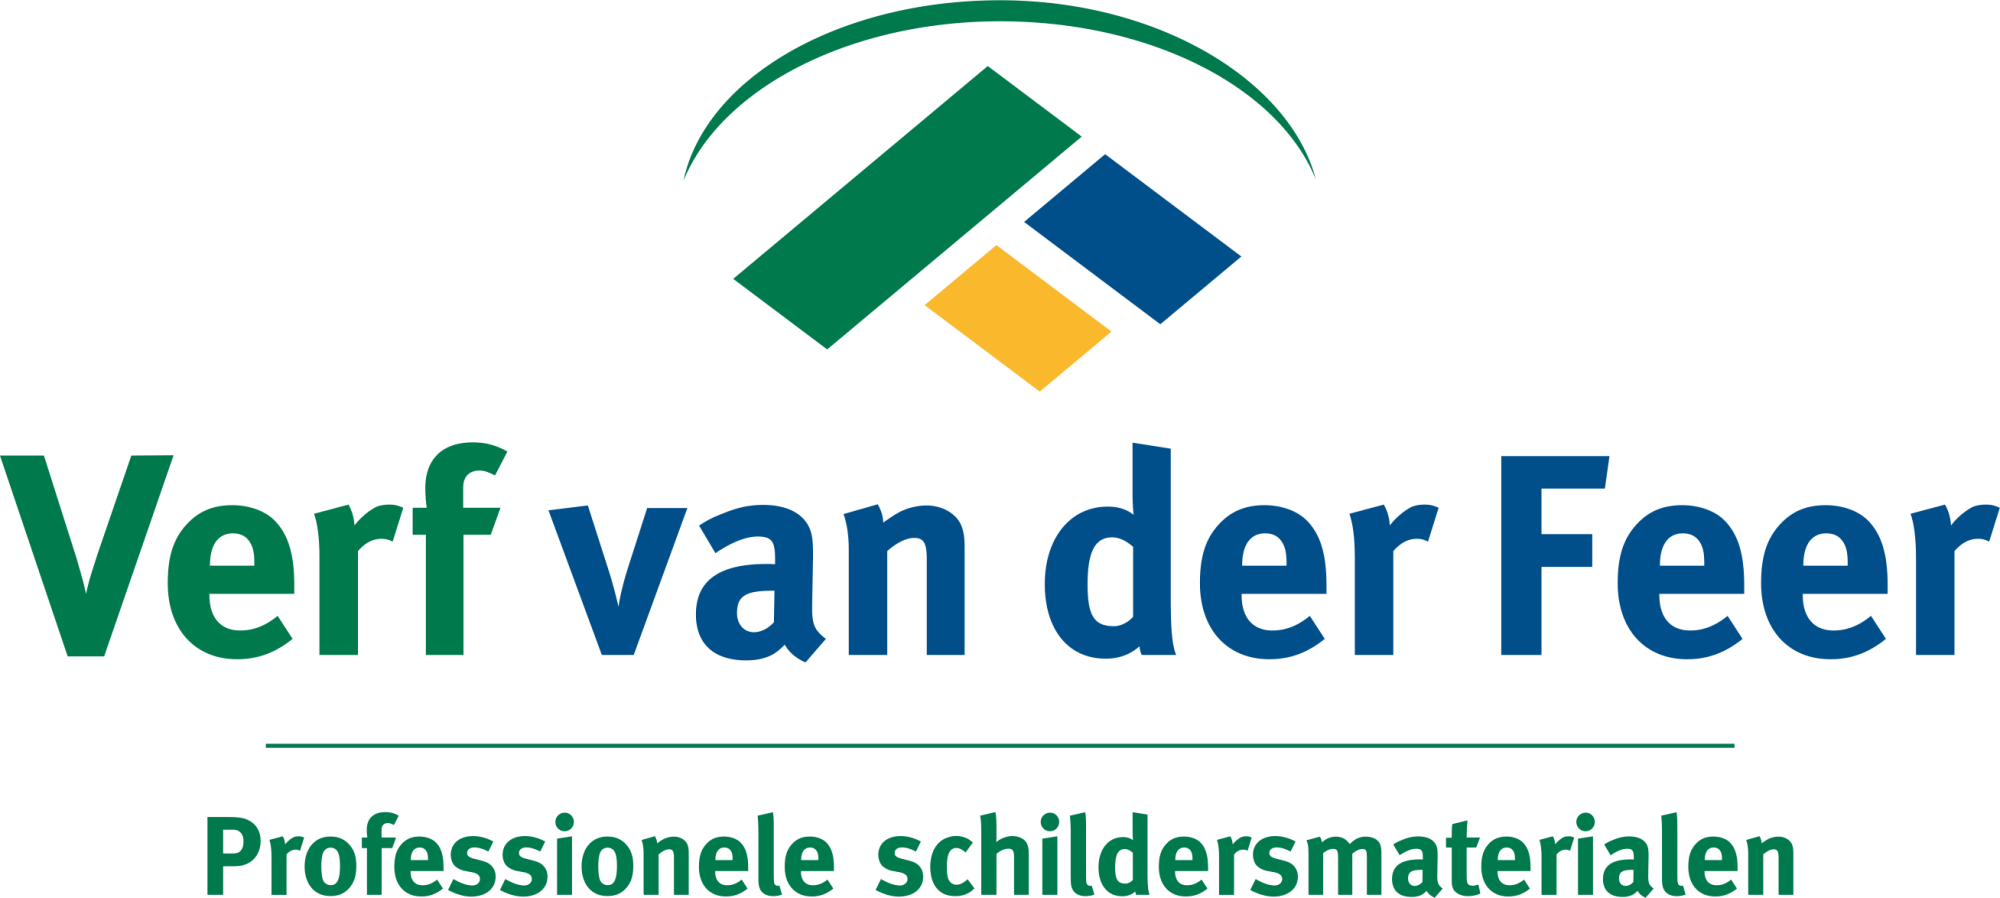 Logo verf van der feer transparante achtergrond groen blauw geel